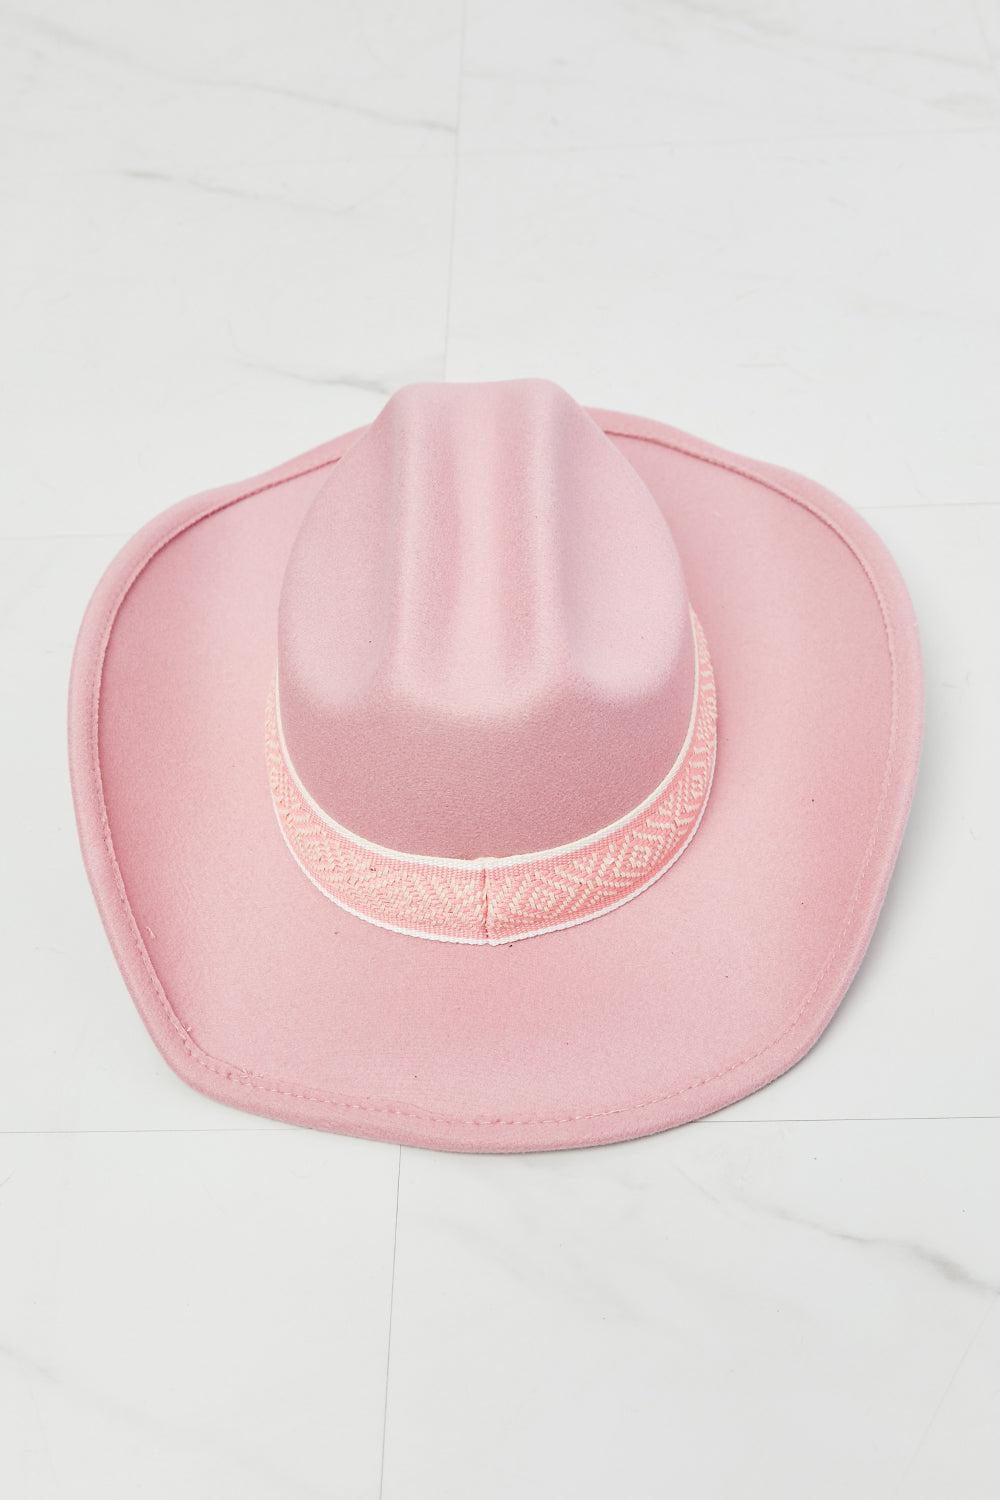 Fame Western Cutie Cowboy Hat in Pink BLUE ZONE PLANET